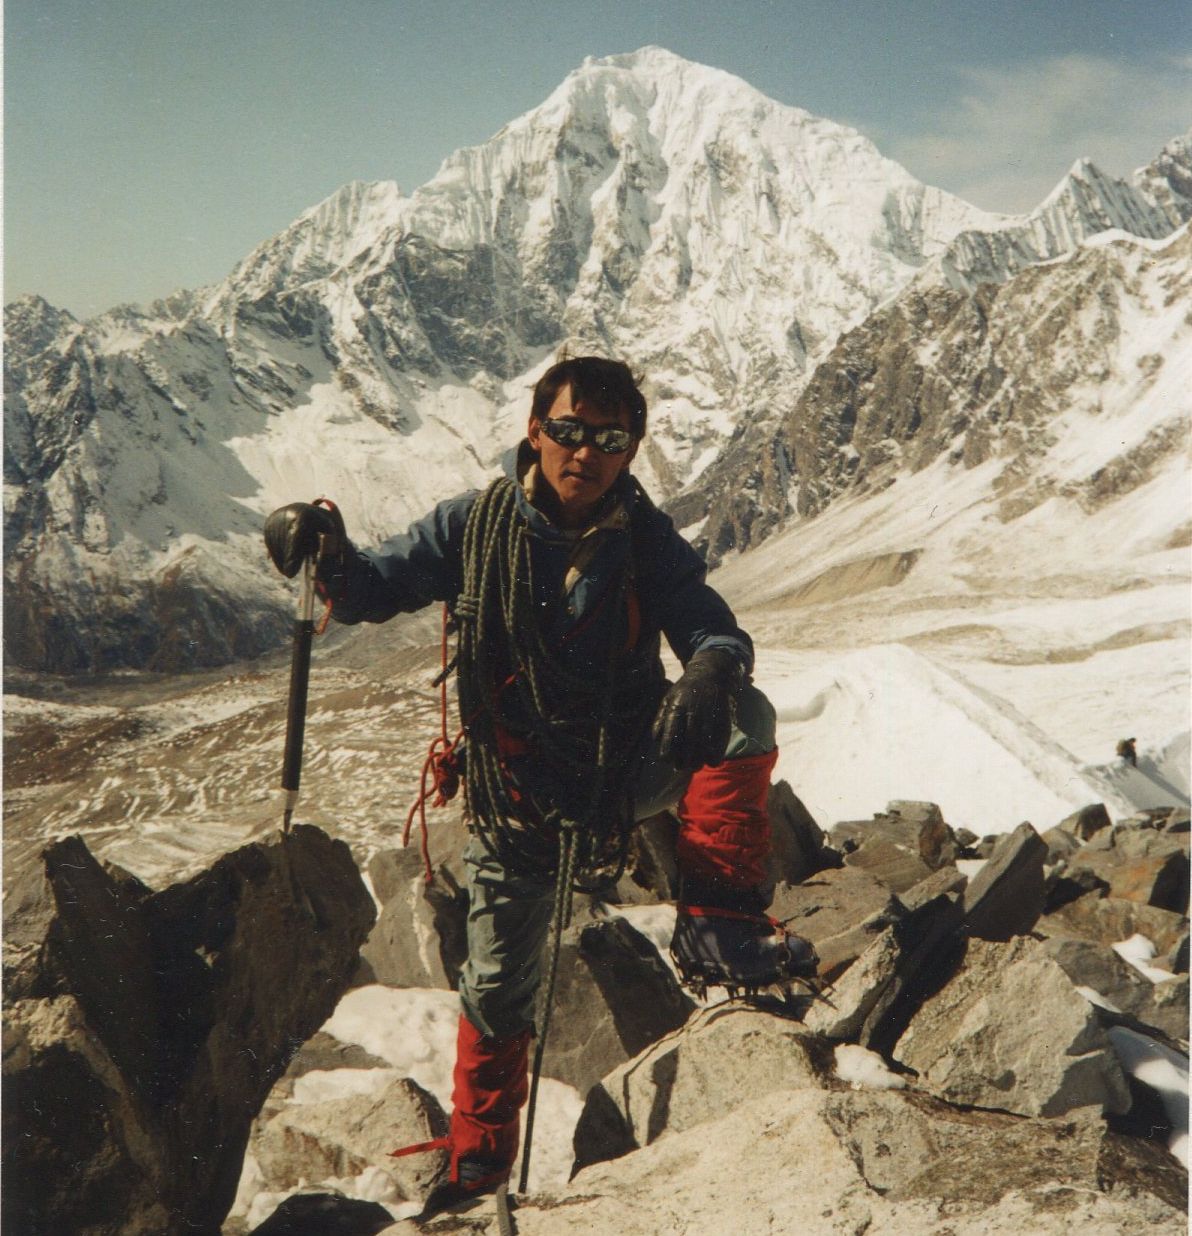 Nima Gyalzen Sherpa on summit of Yala Peak with Langtang Lirung in background